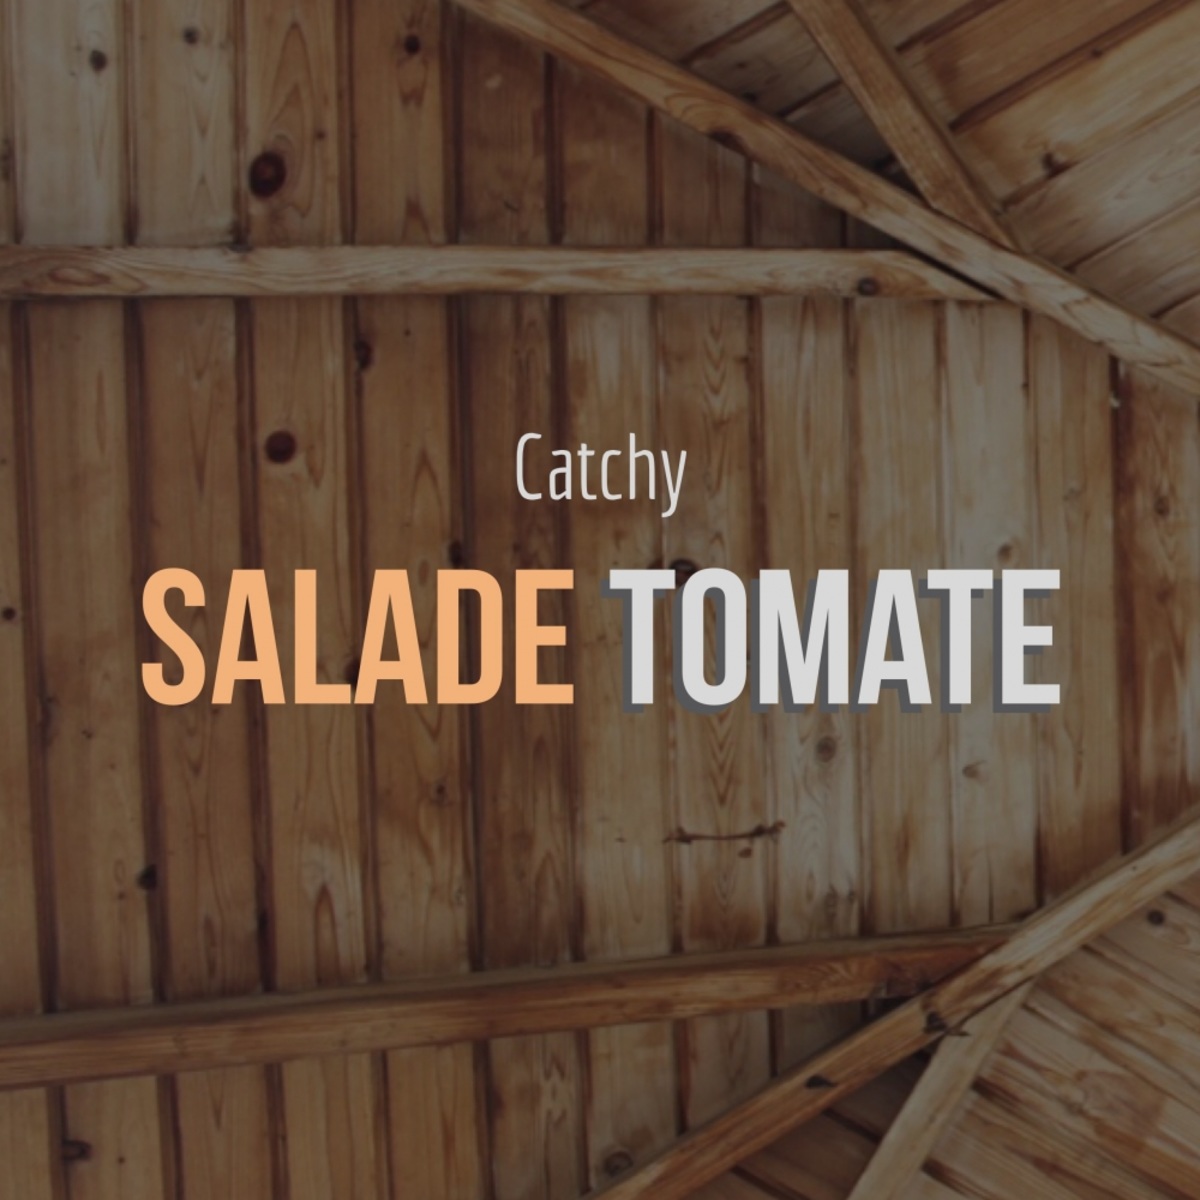 Salade Tomate - Catchy (Daweird Mix) / MCT Luxury